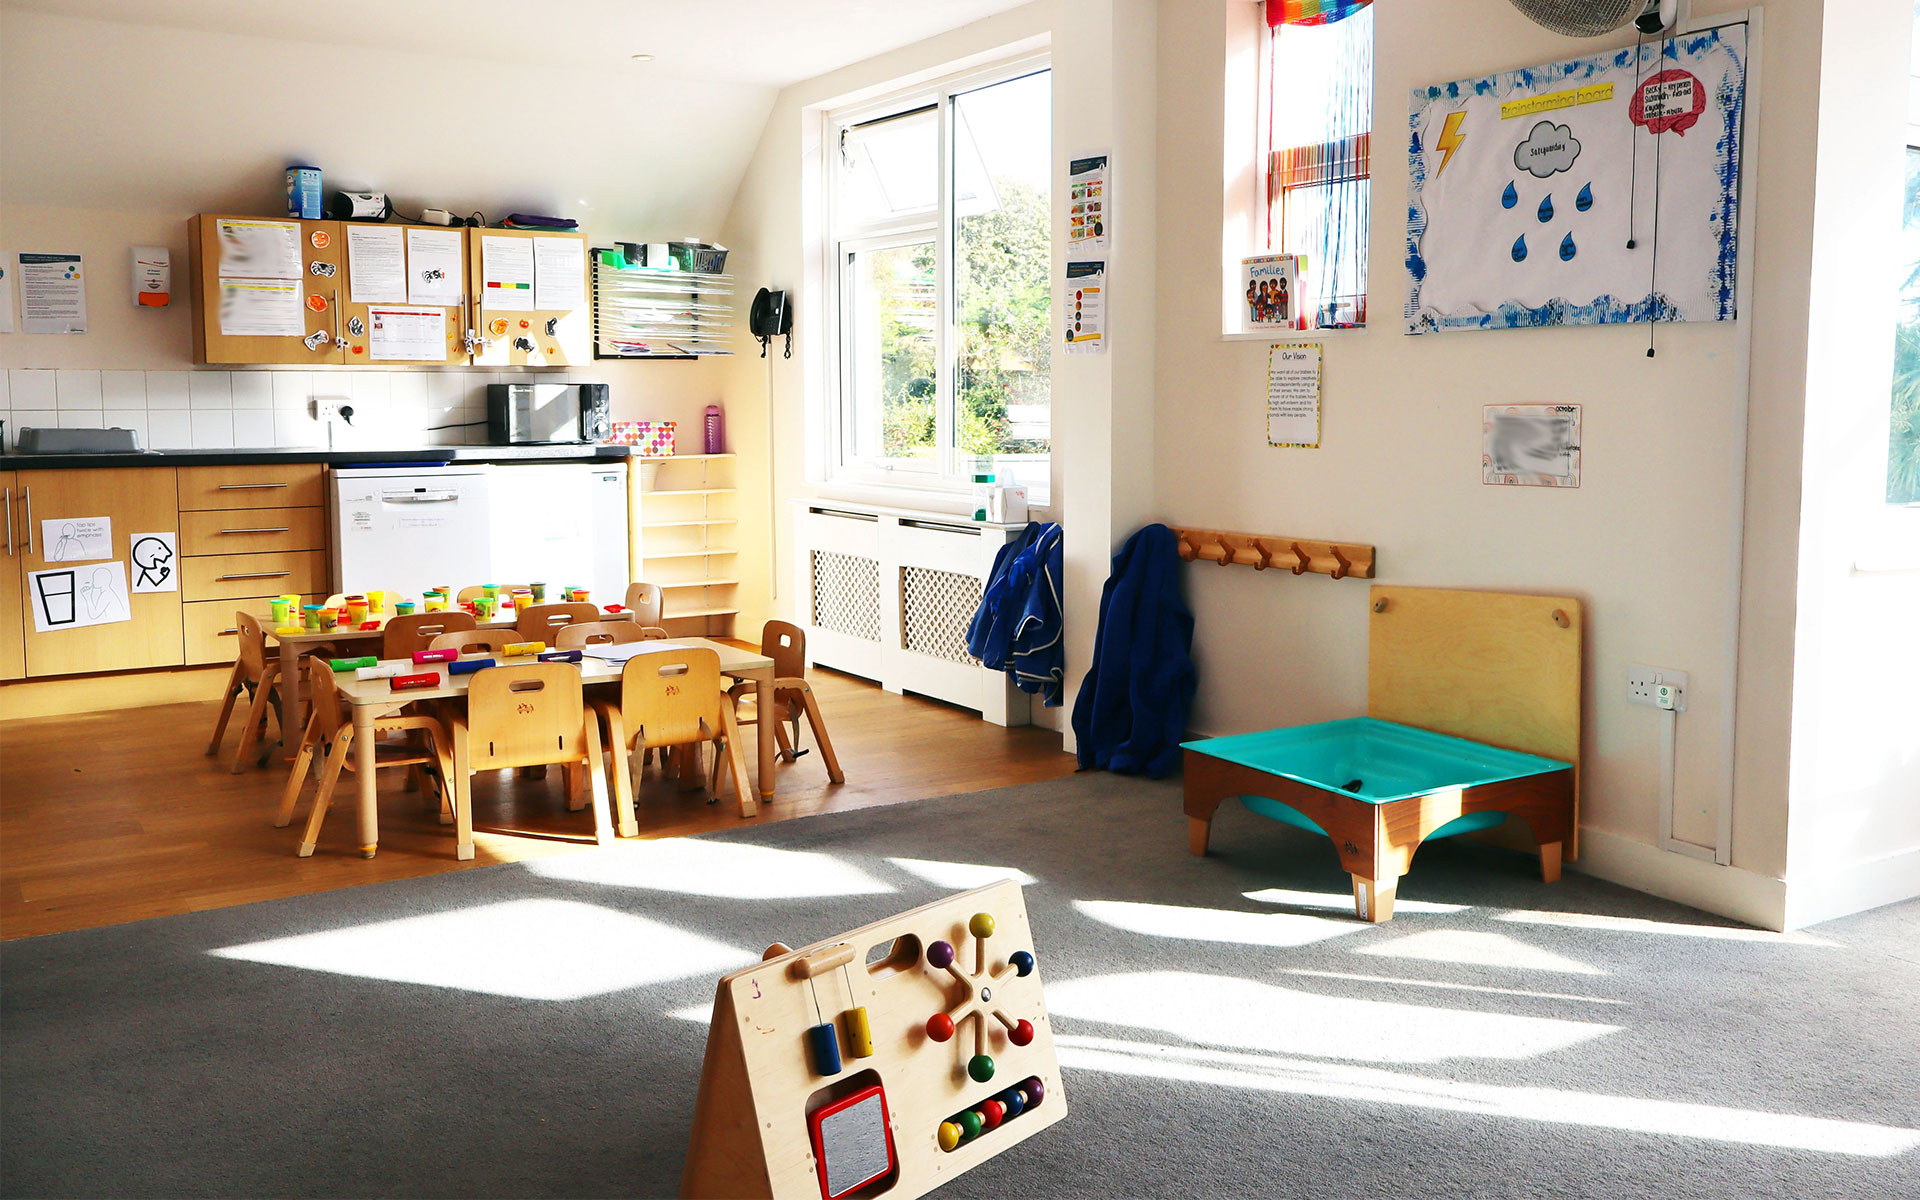 Bright Horizons Shoreham-by-Sea Day Nursery and Preschool 3